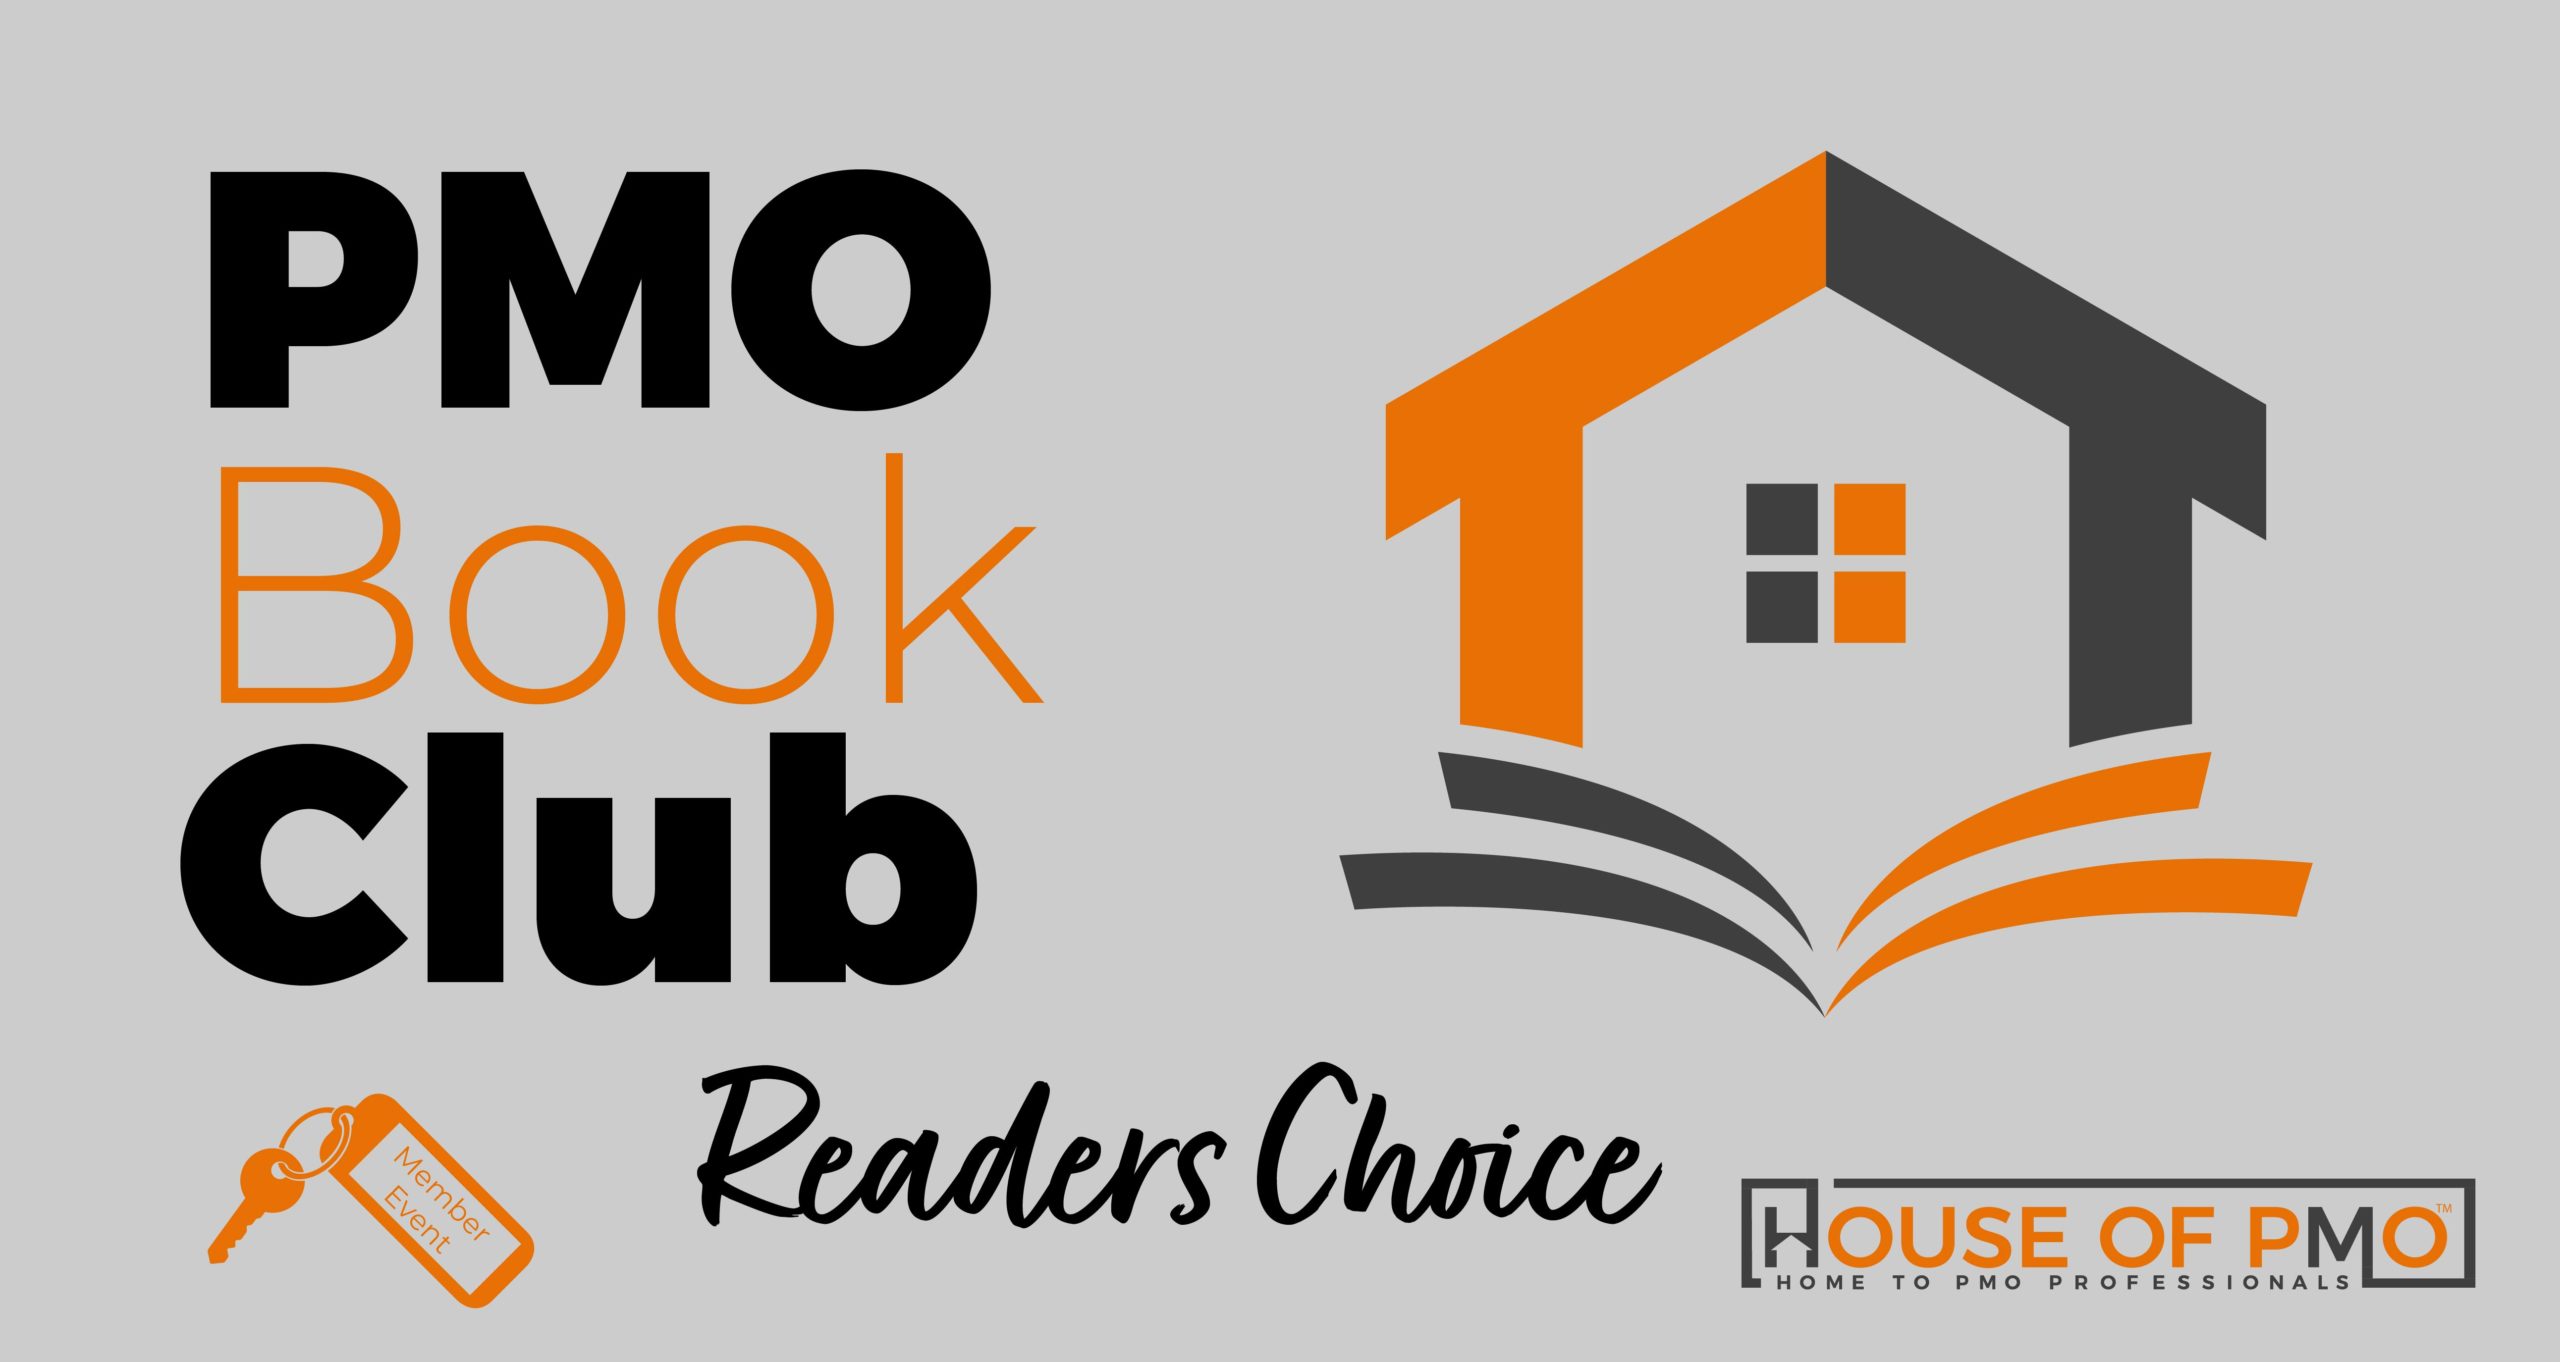 Image promoting PMO Book Club